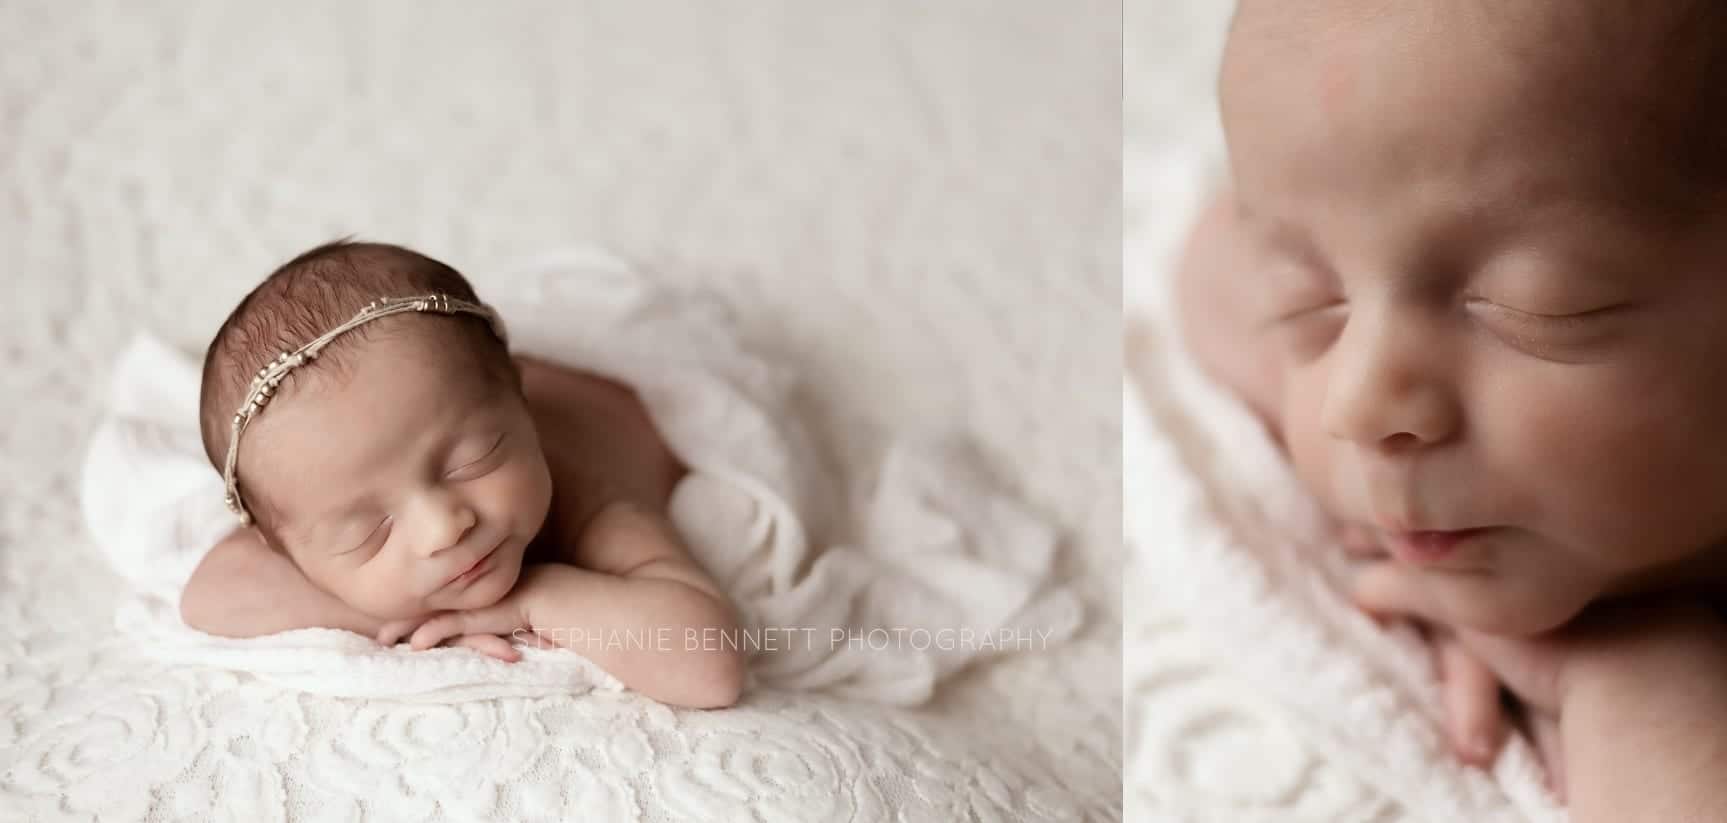 Newborn girl on lace minneapolis photographer